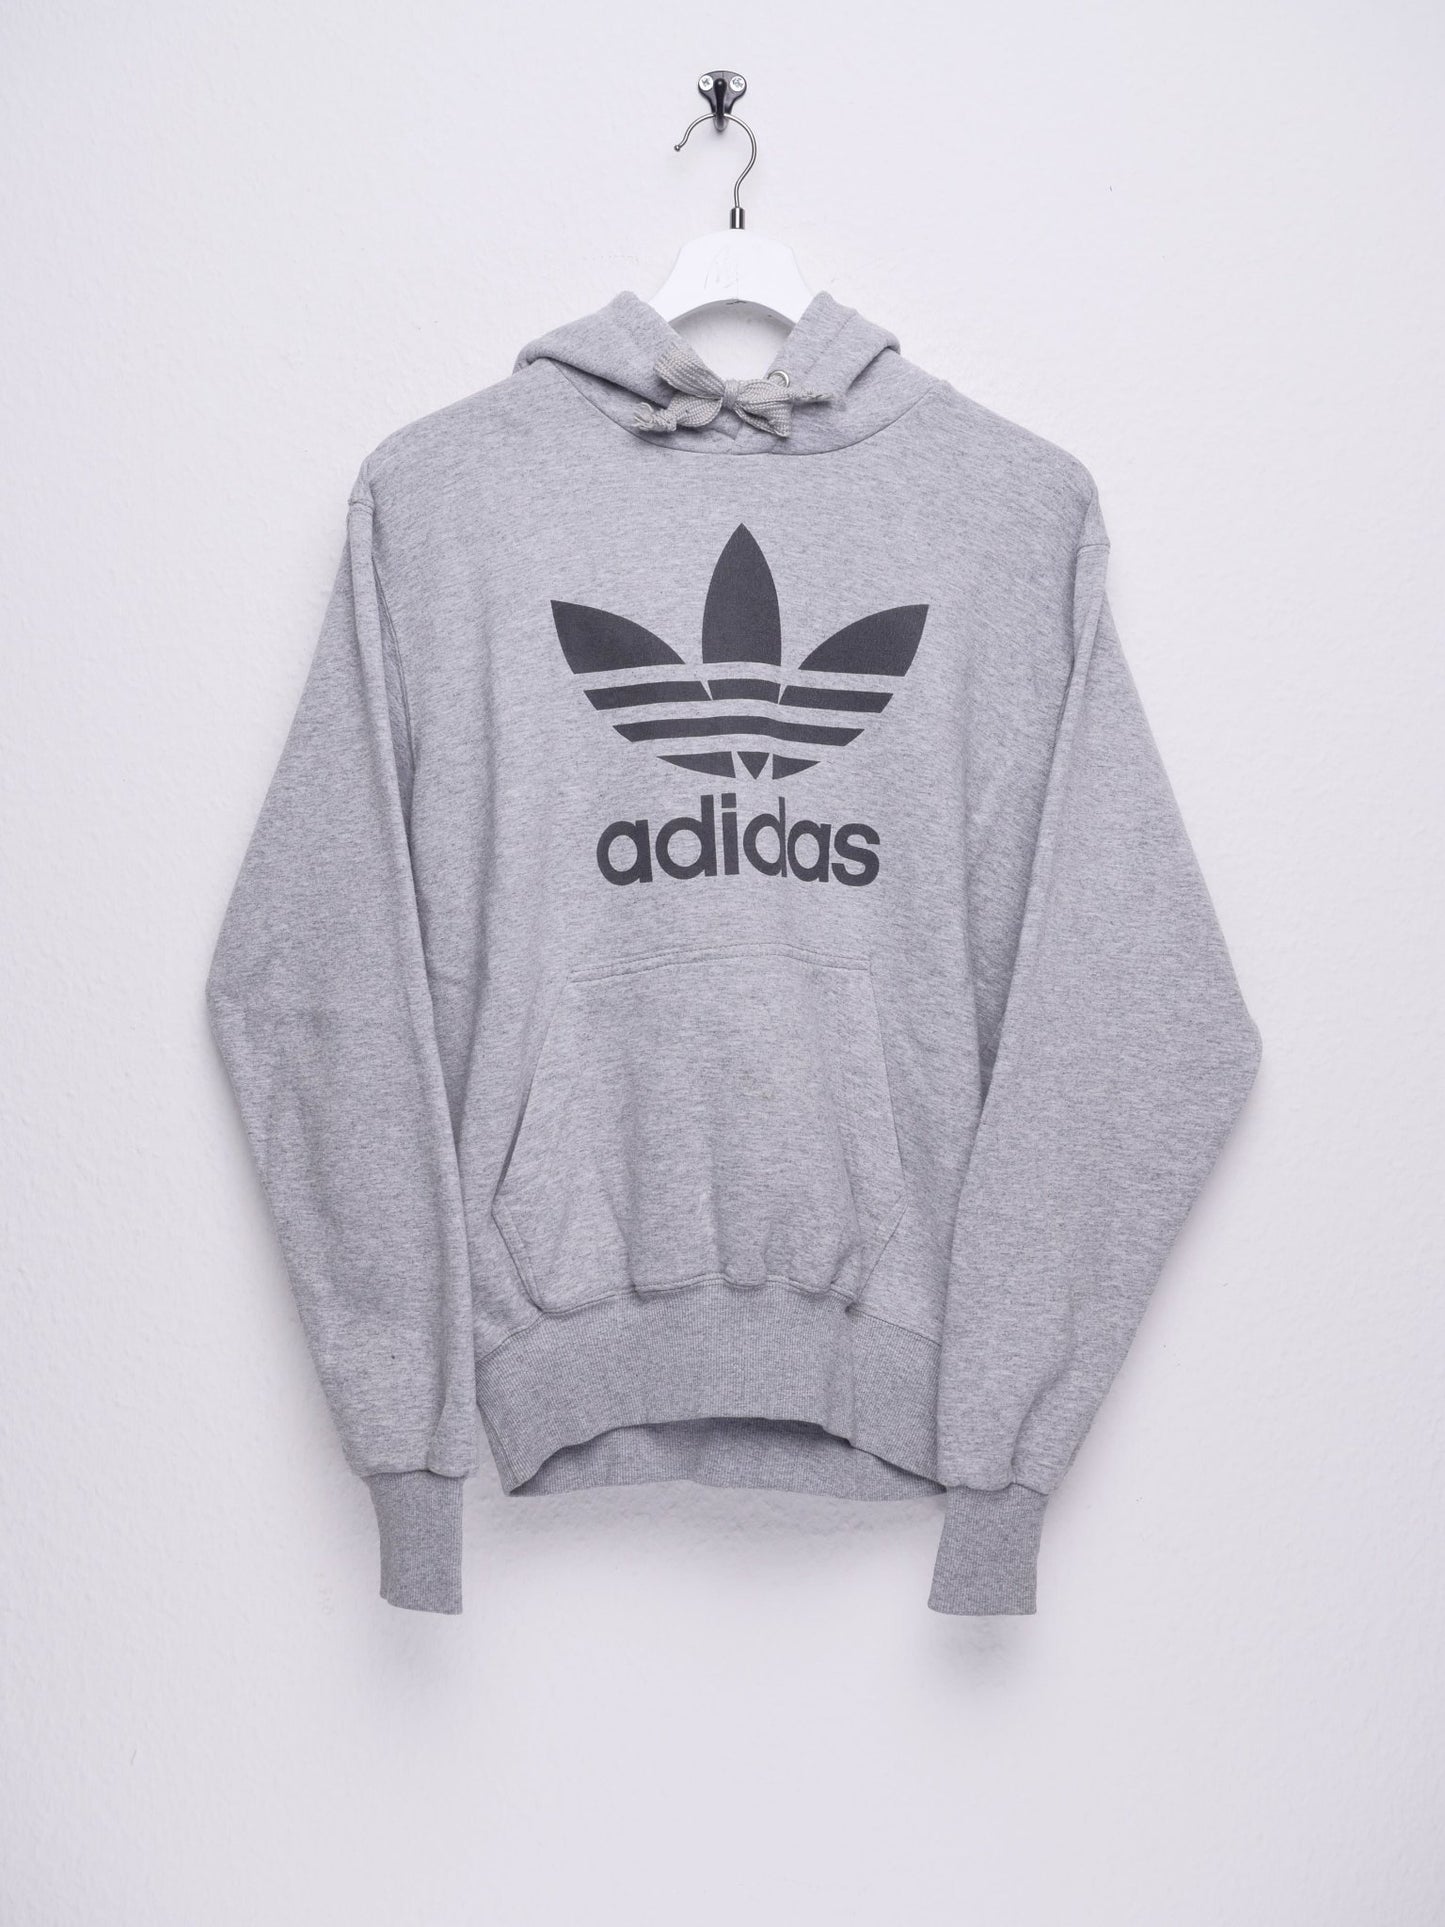 Adidas printed Logo grey basic Hoodie - Peeces